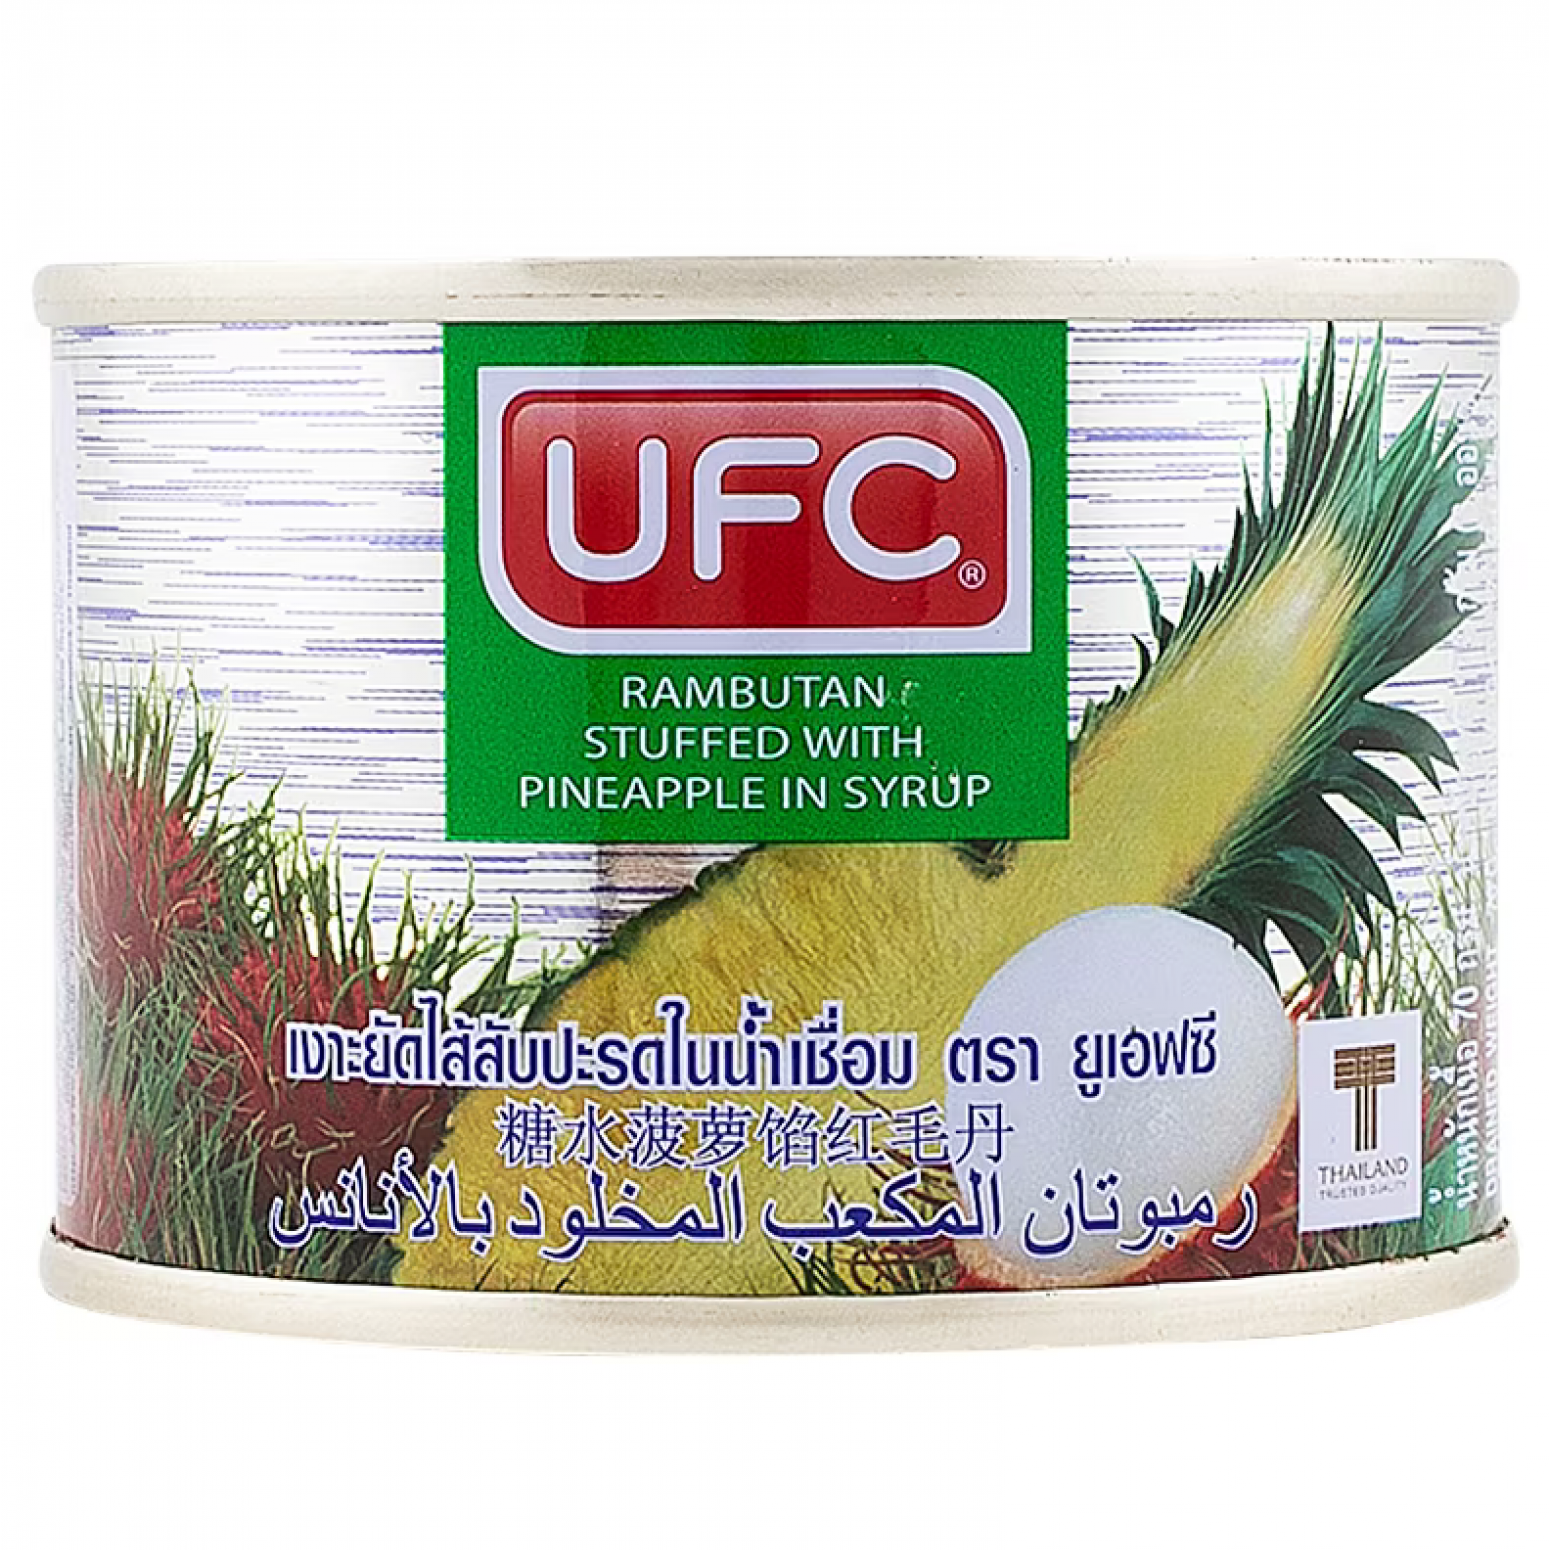 UFC Rambutan Stuffed with Pineapple in Syrup 170g.